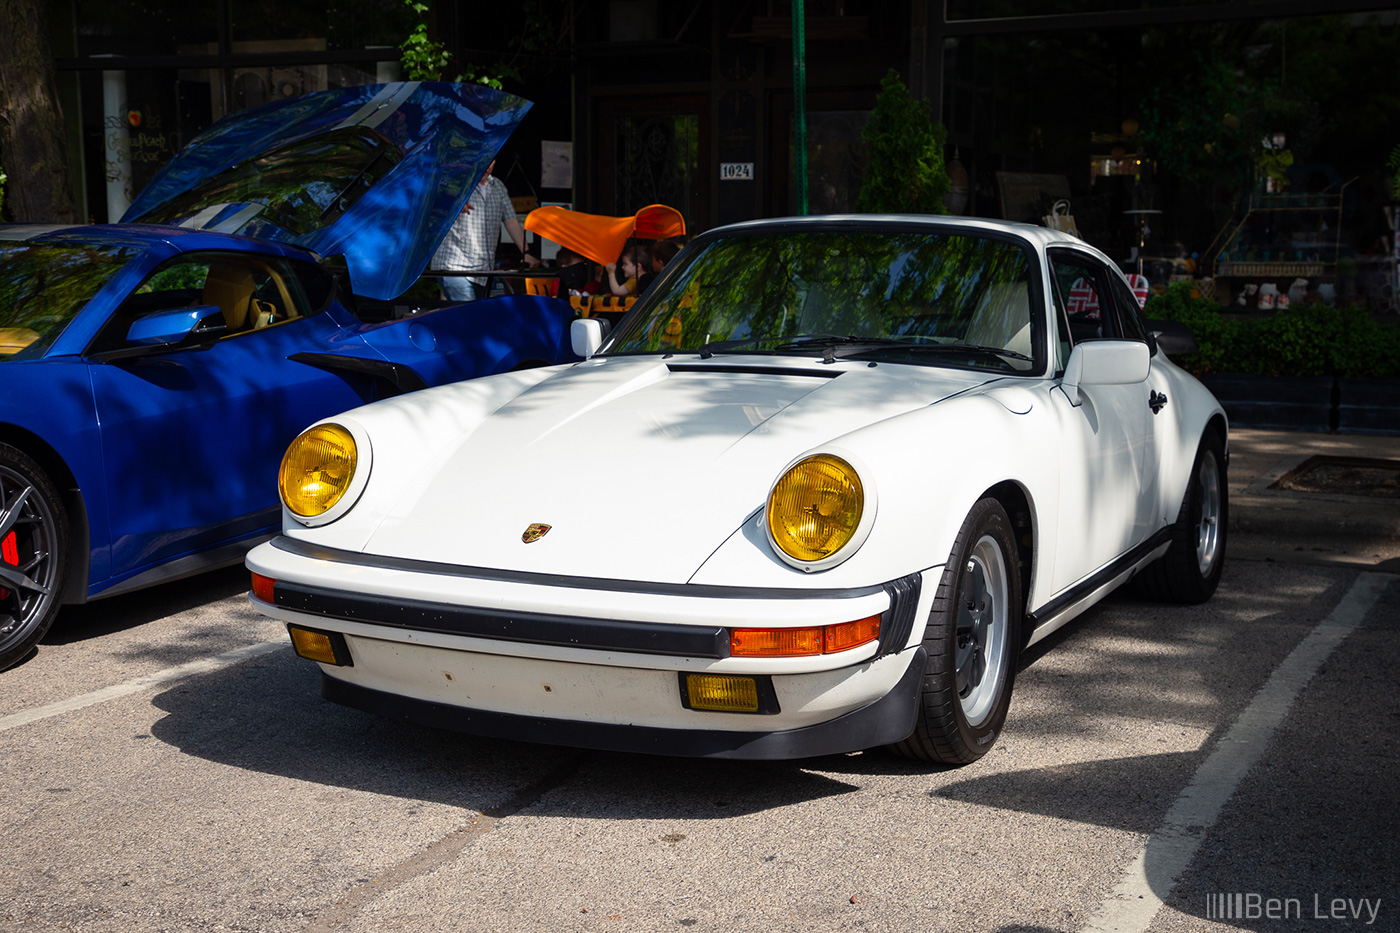 White Porsche 911 at Car Meet in Oak Park